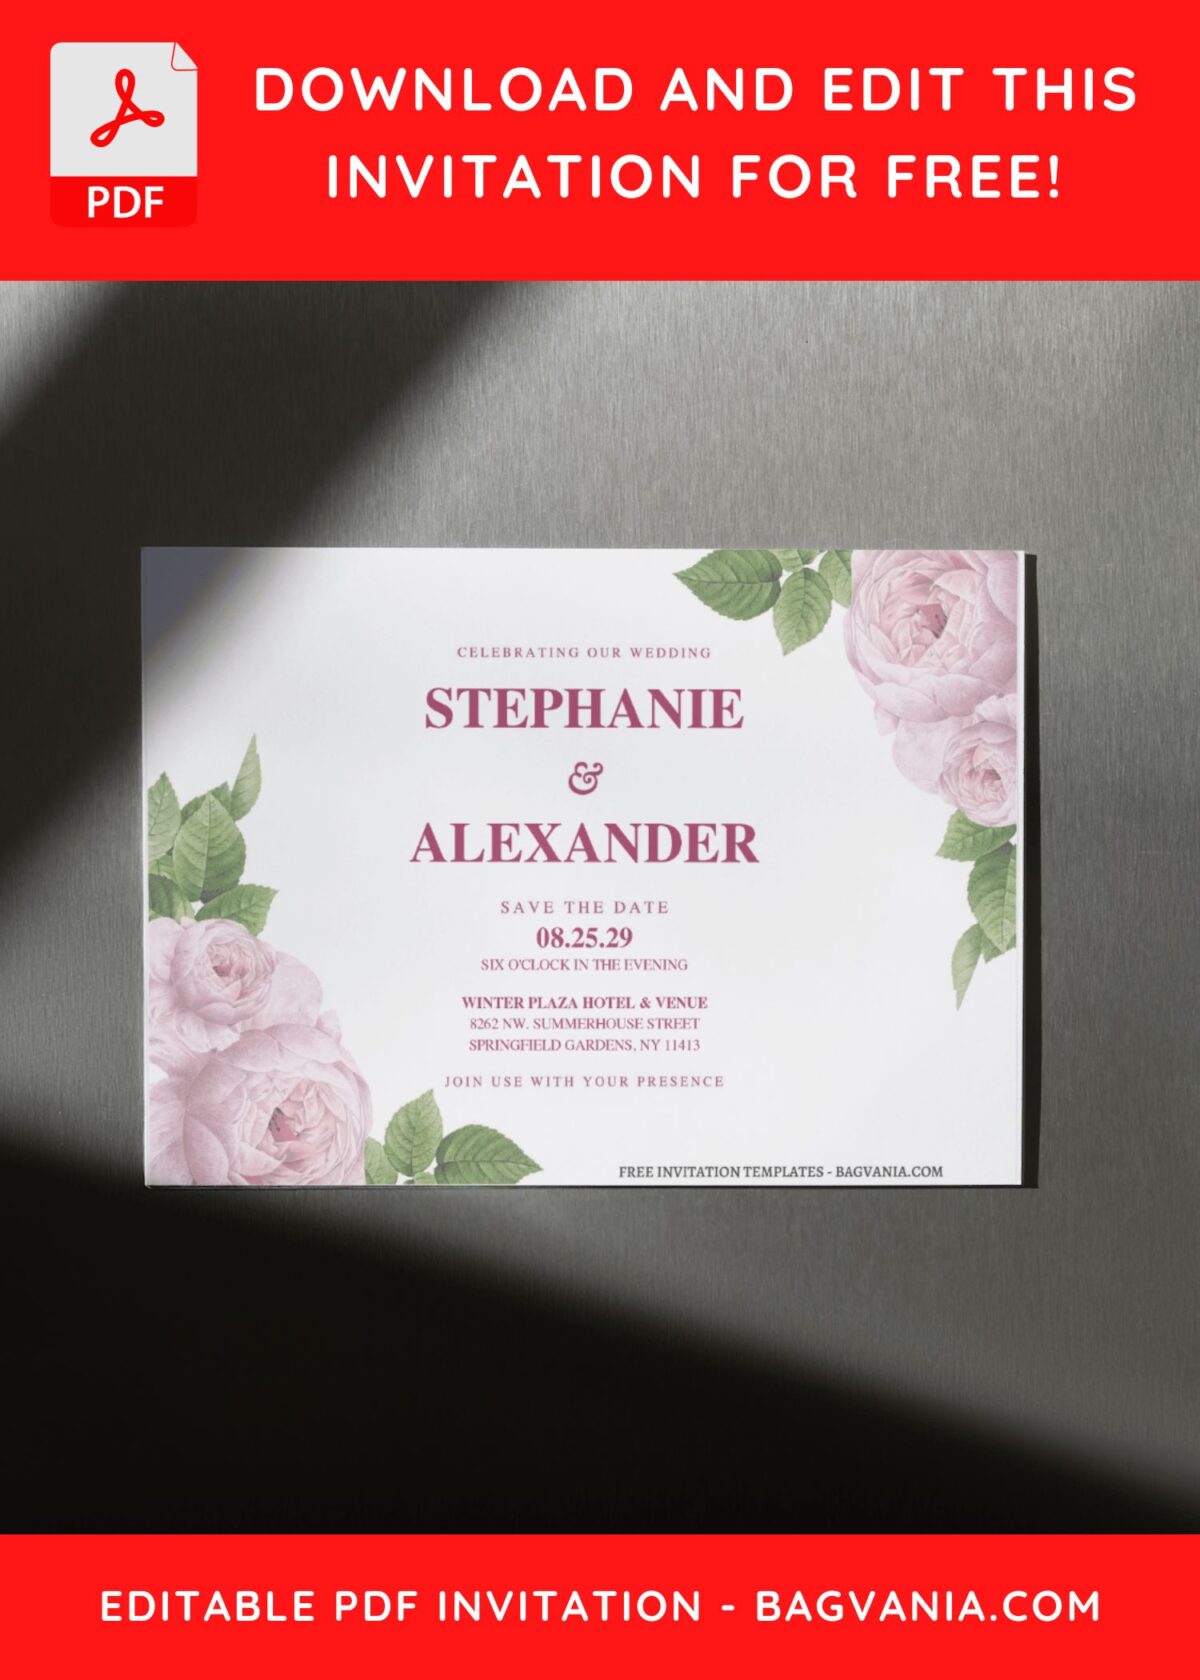 (Free Editable PDF) Exquisite Watercolor Rose & Peony Wedding Invitation Templates D